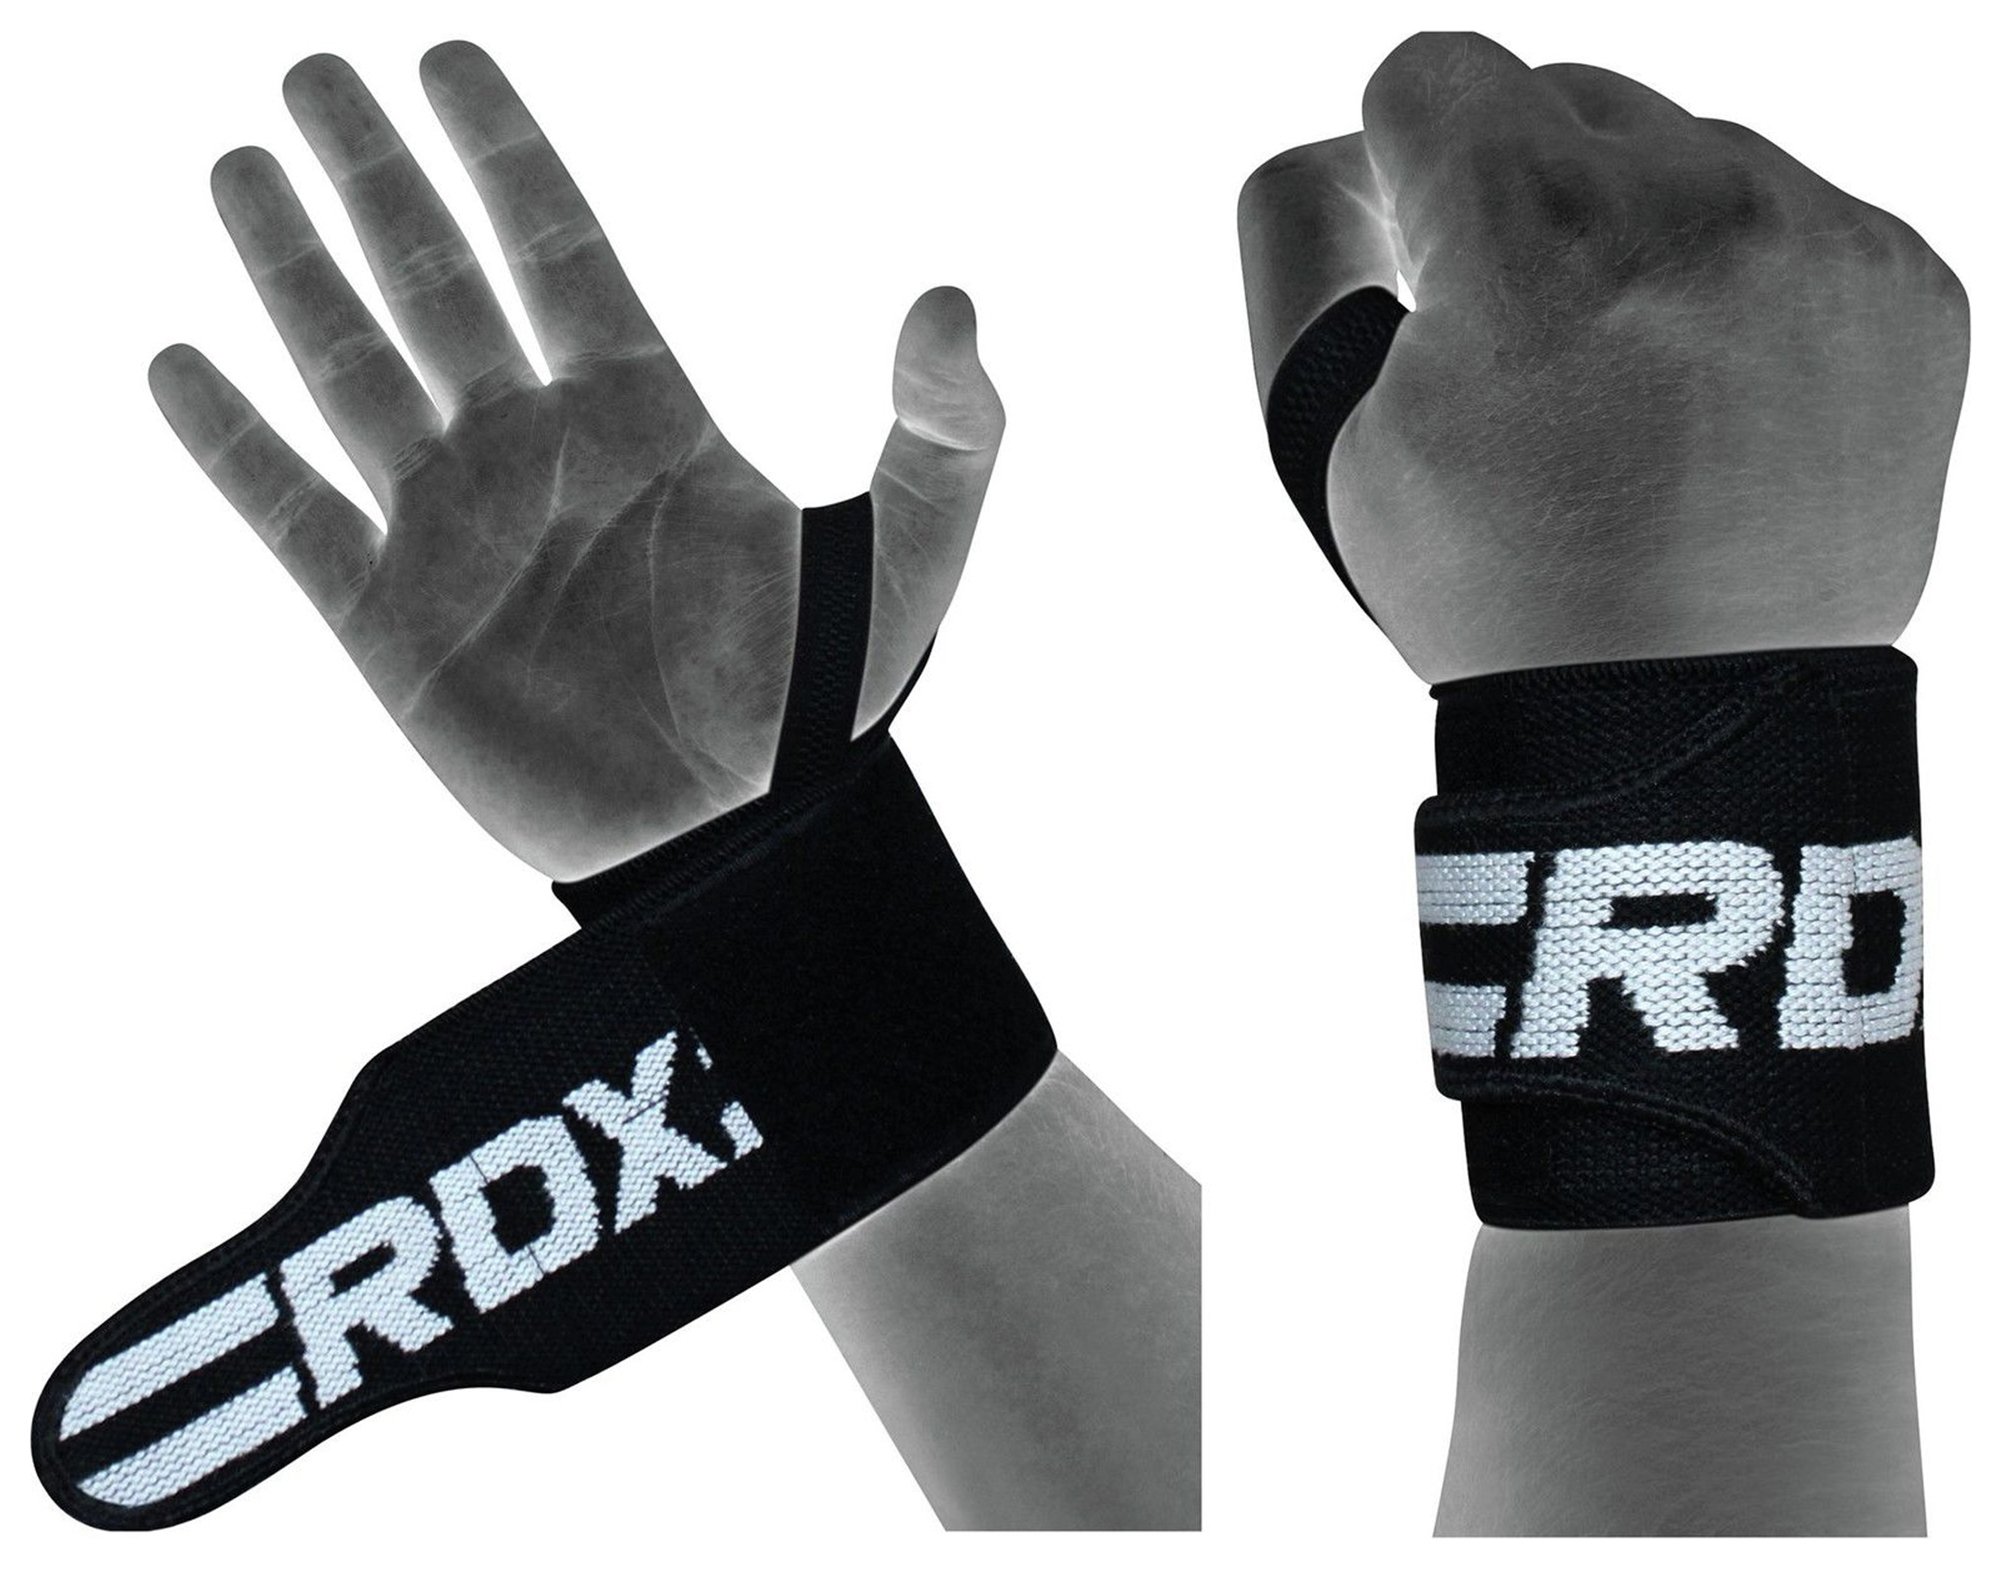 RDX Weightlifting Wrist Wraps